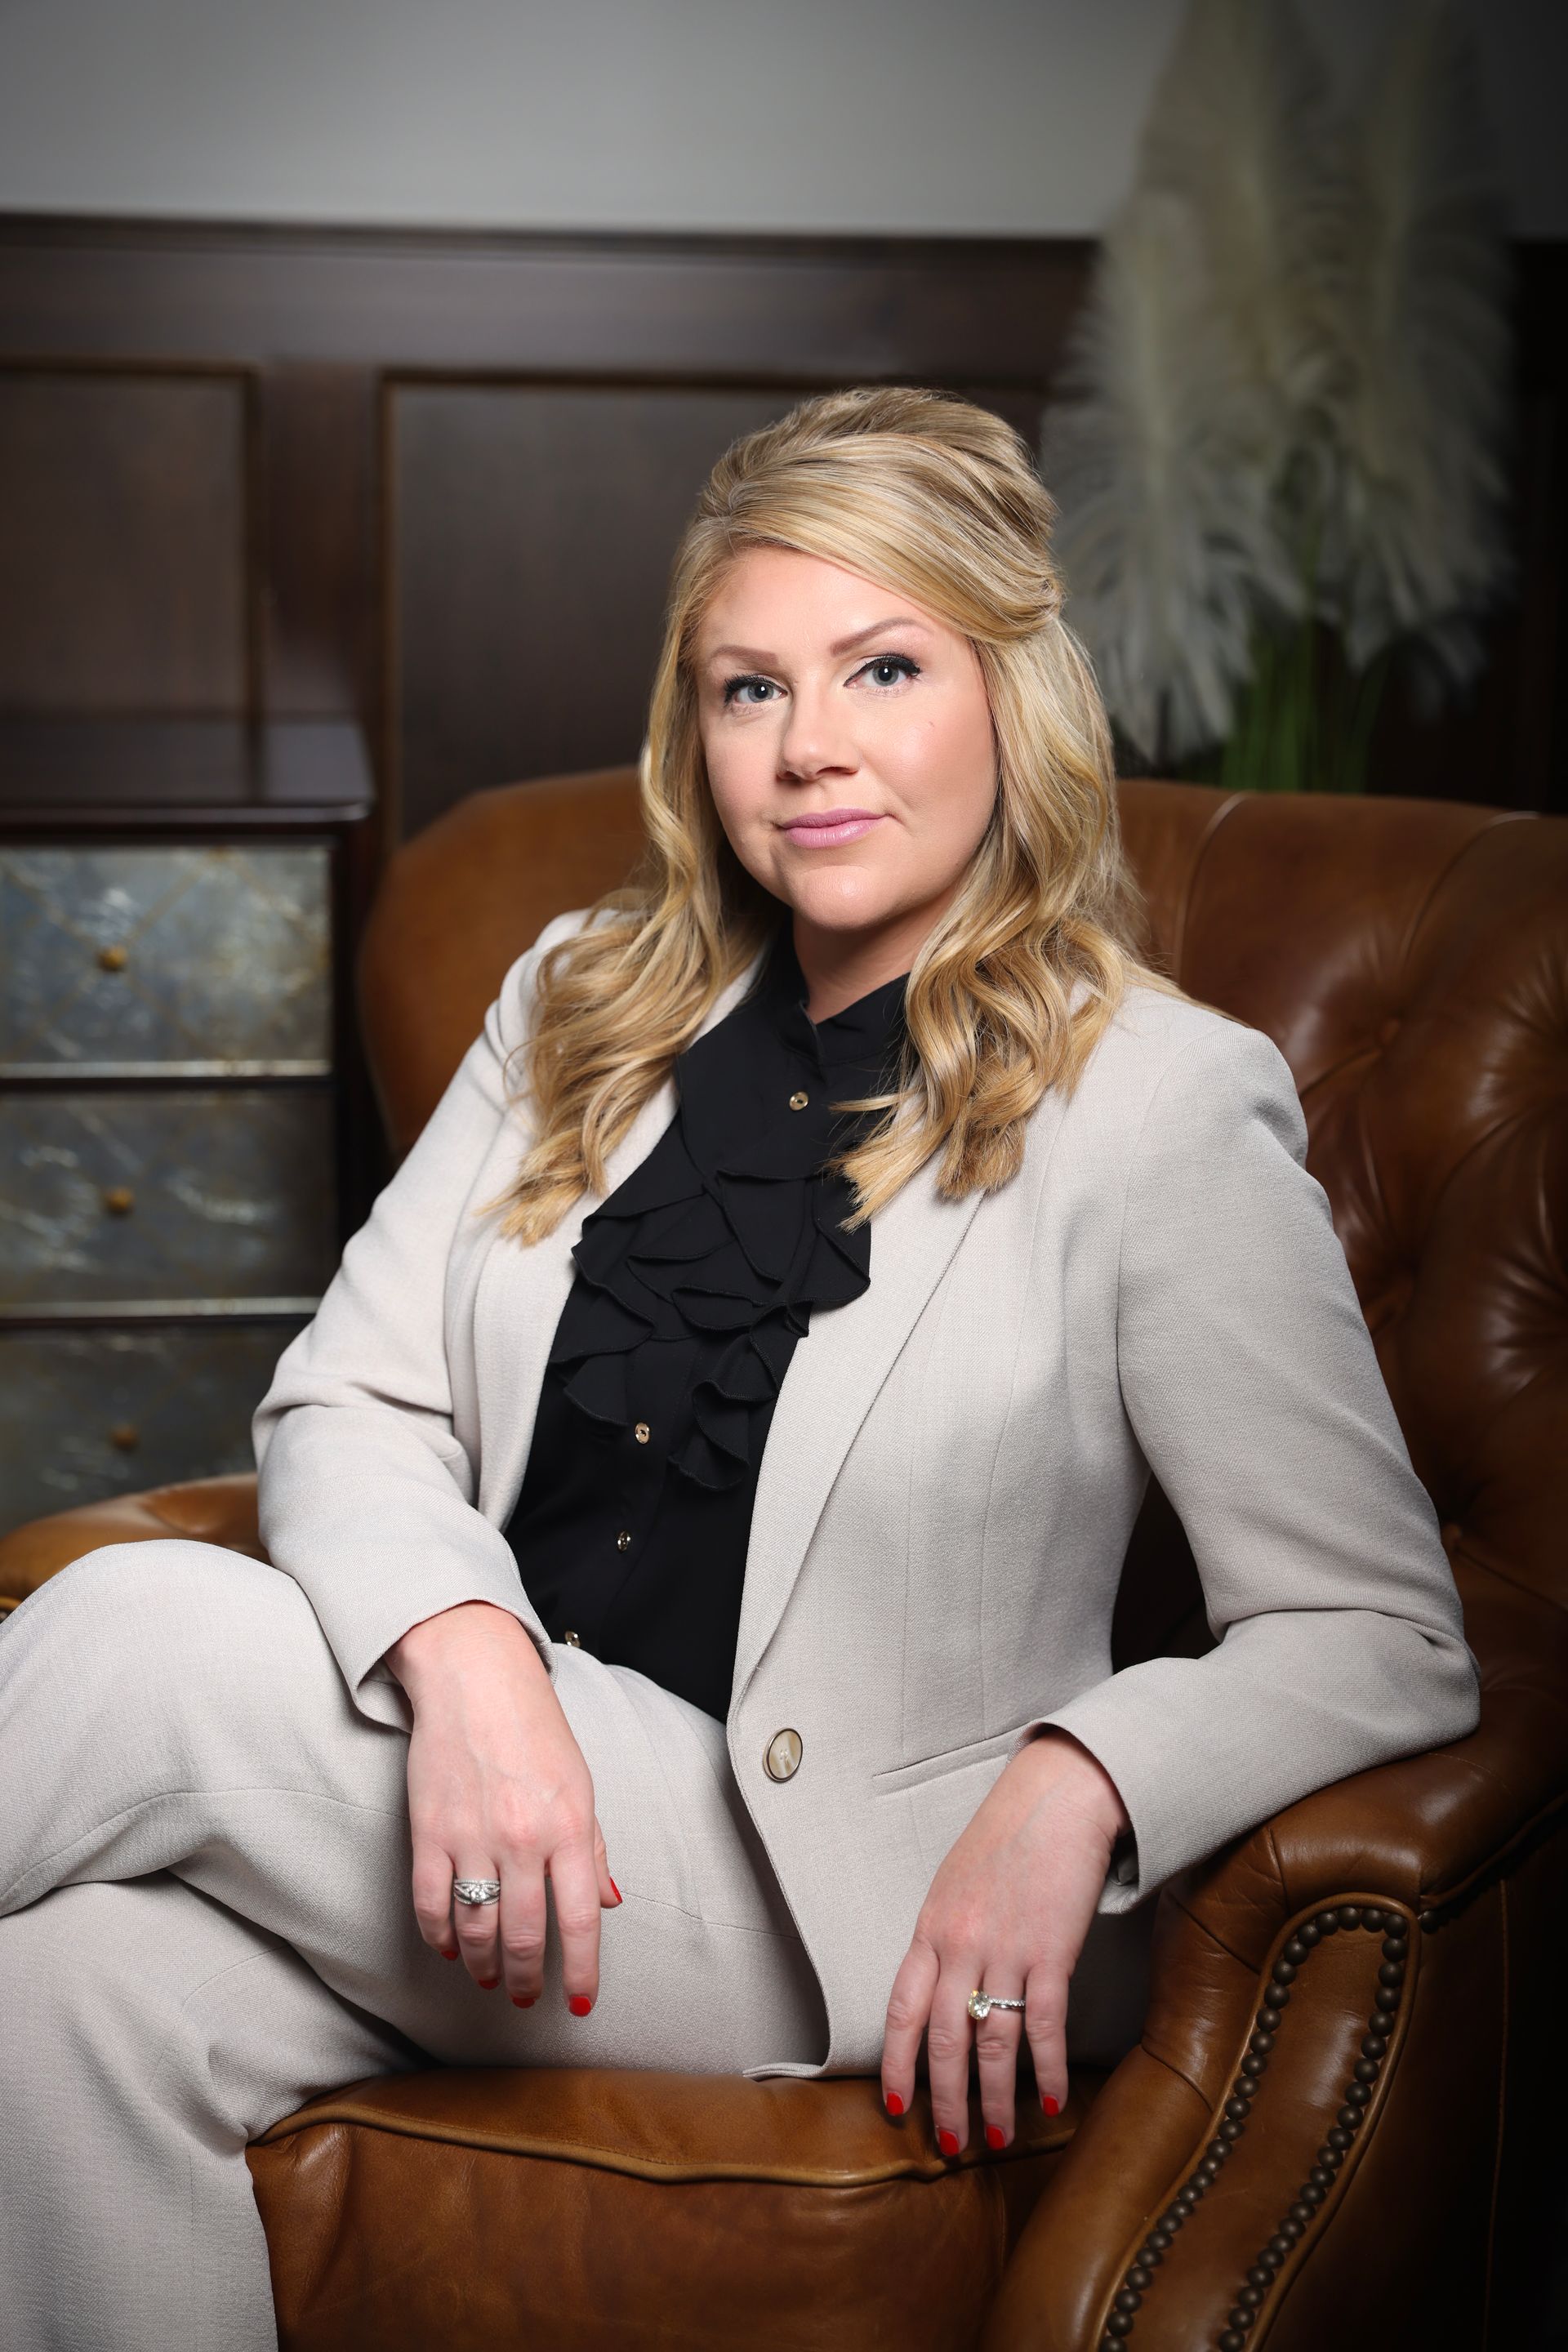 Jill Harper, Experienced Mid-Missouri Attorney at Harper Evans Hilbrenner & Netemeyer